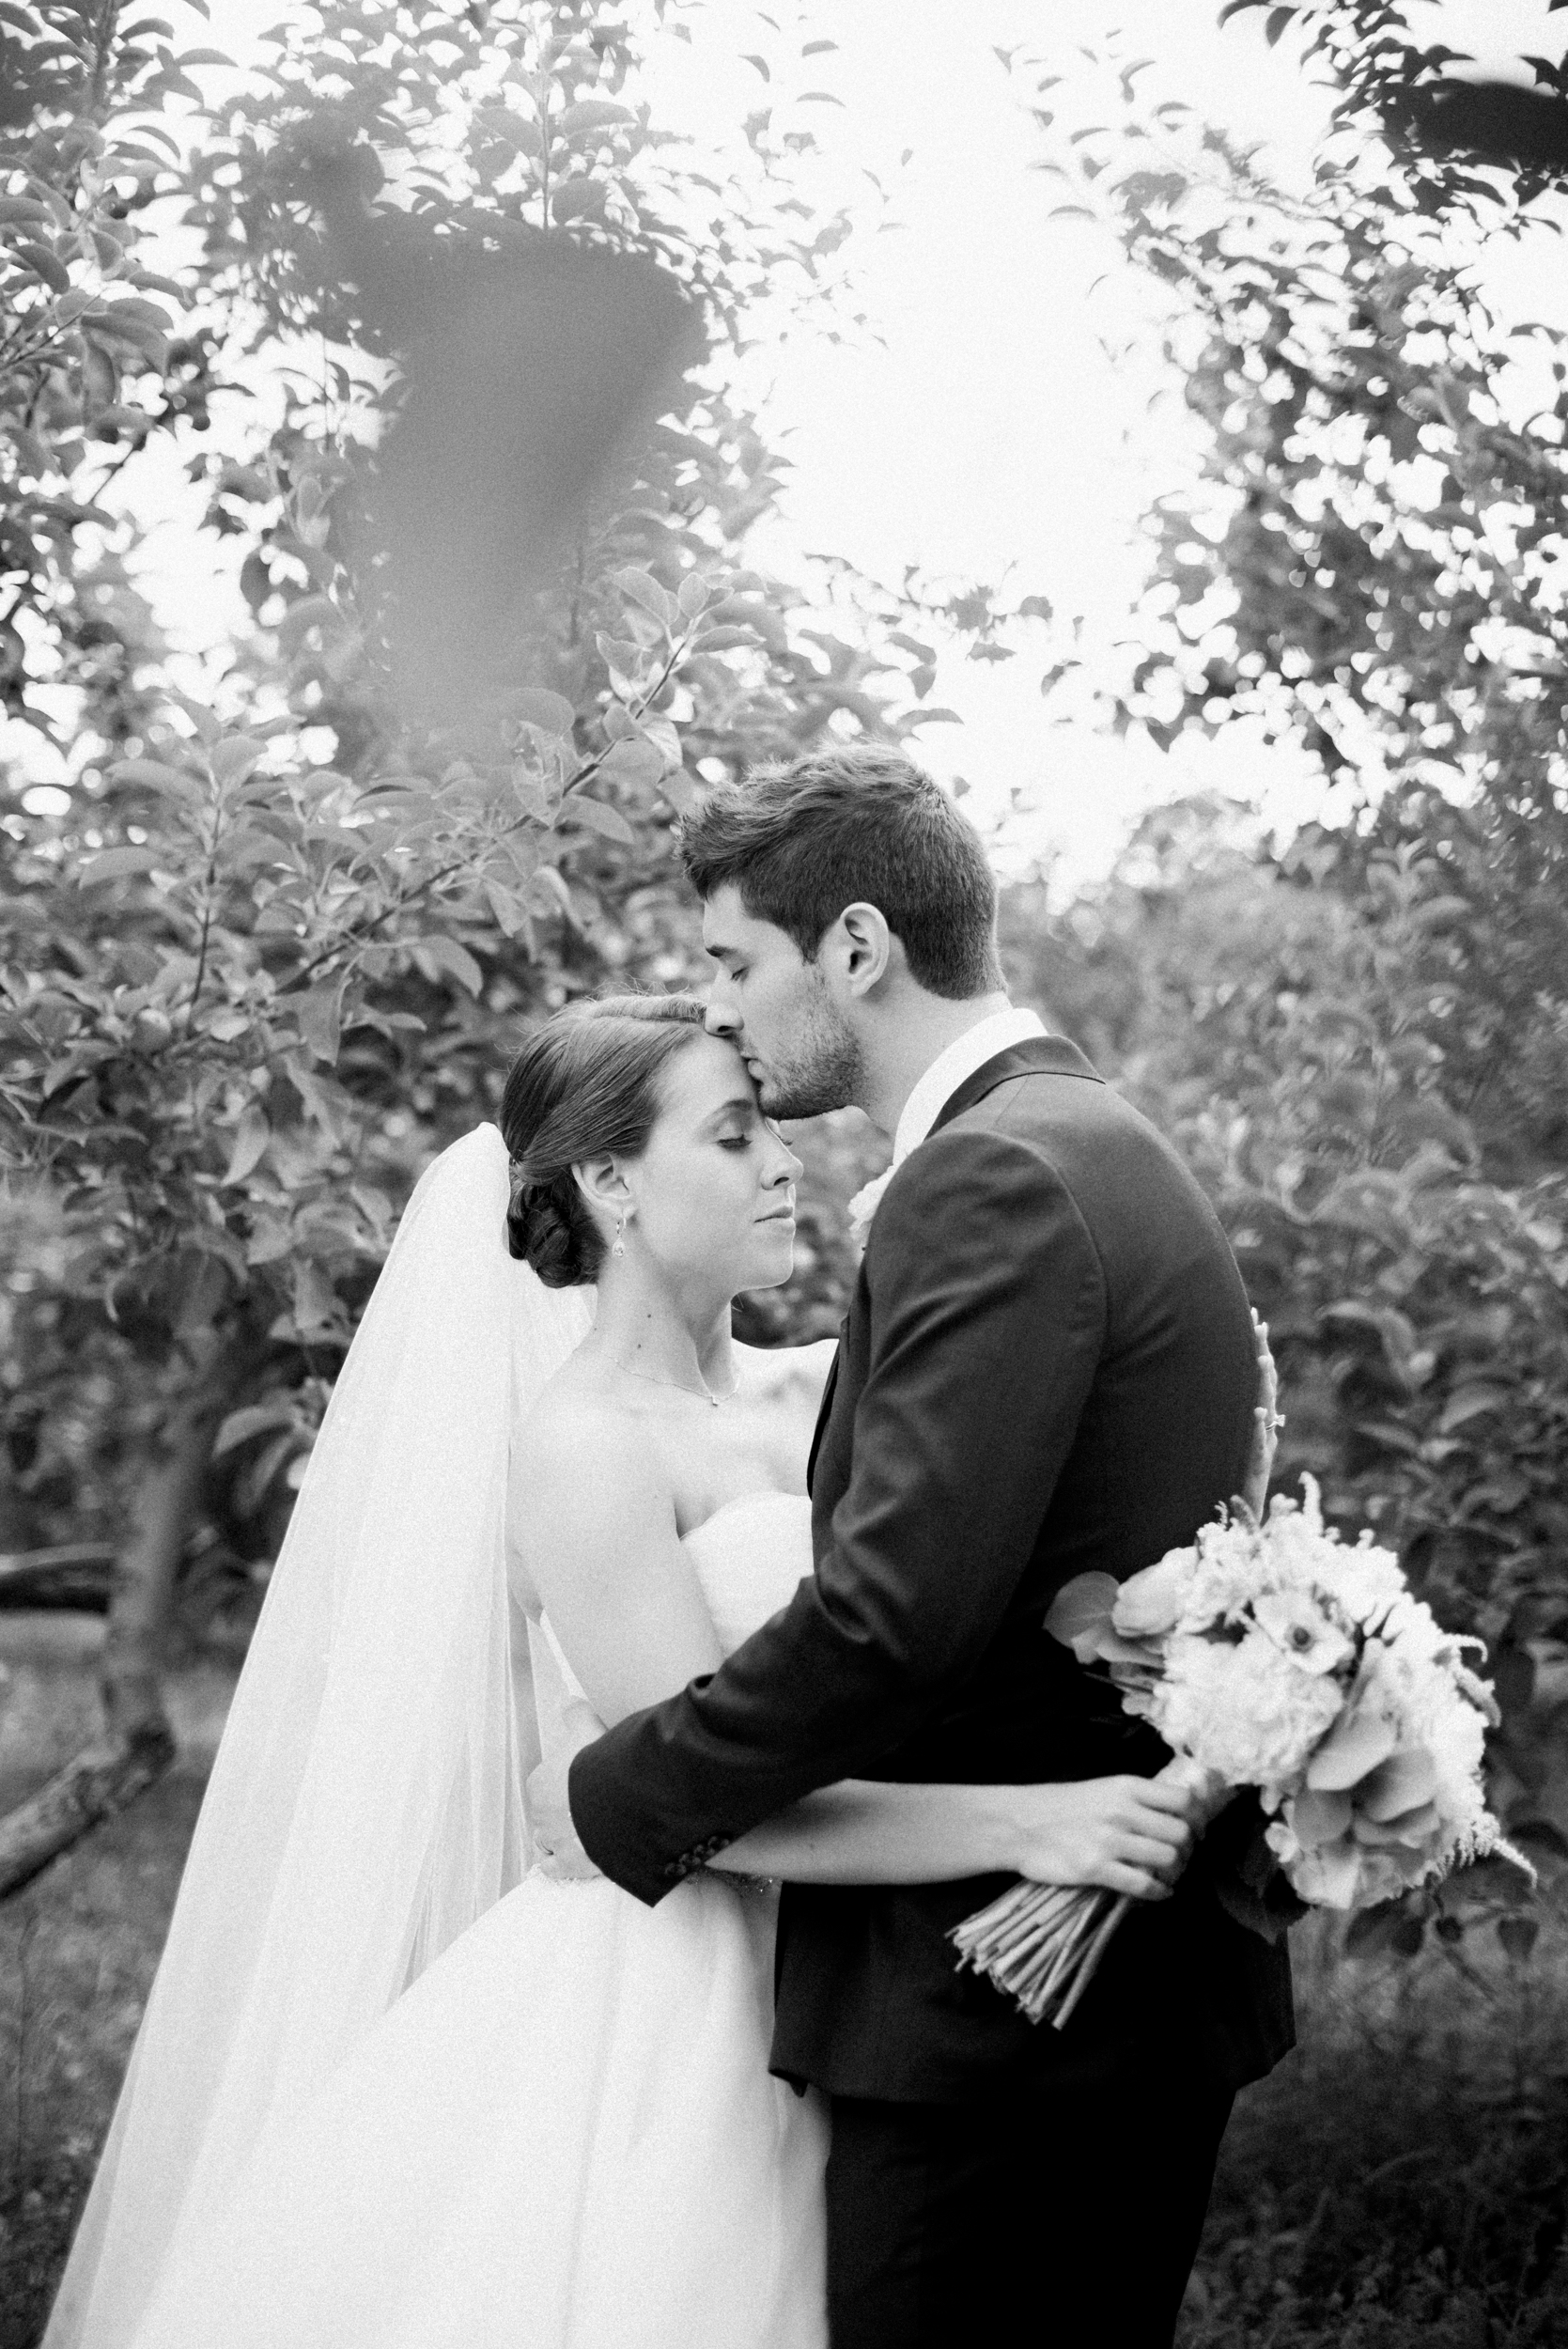 Top Wedding photographers in Massachusetts